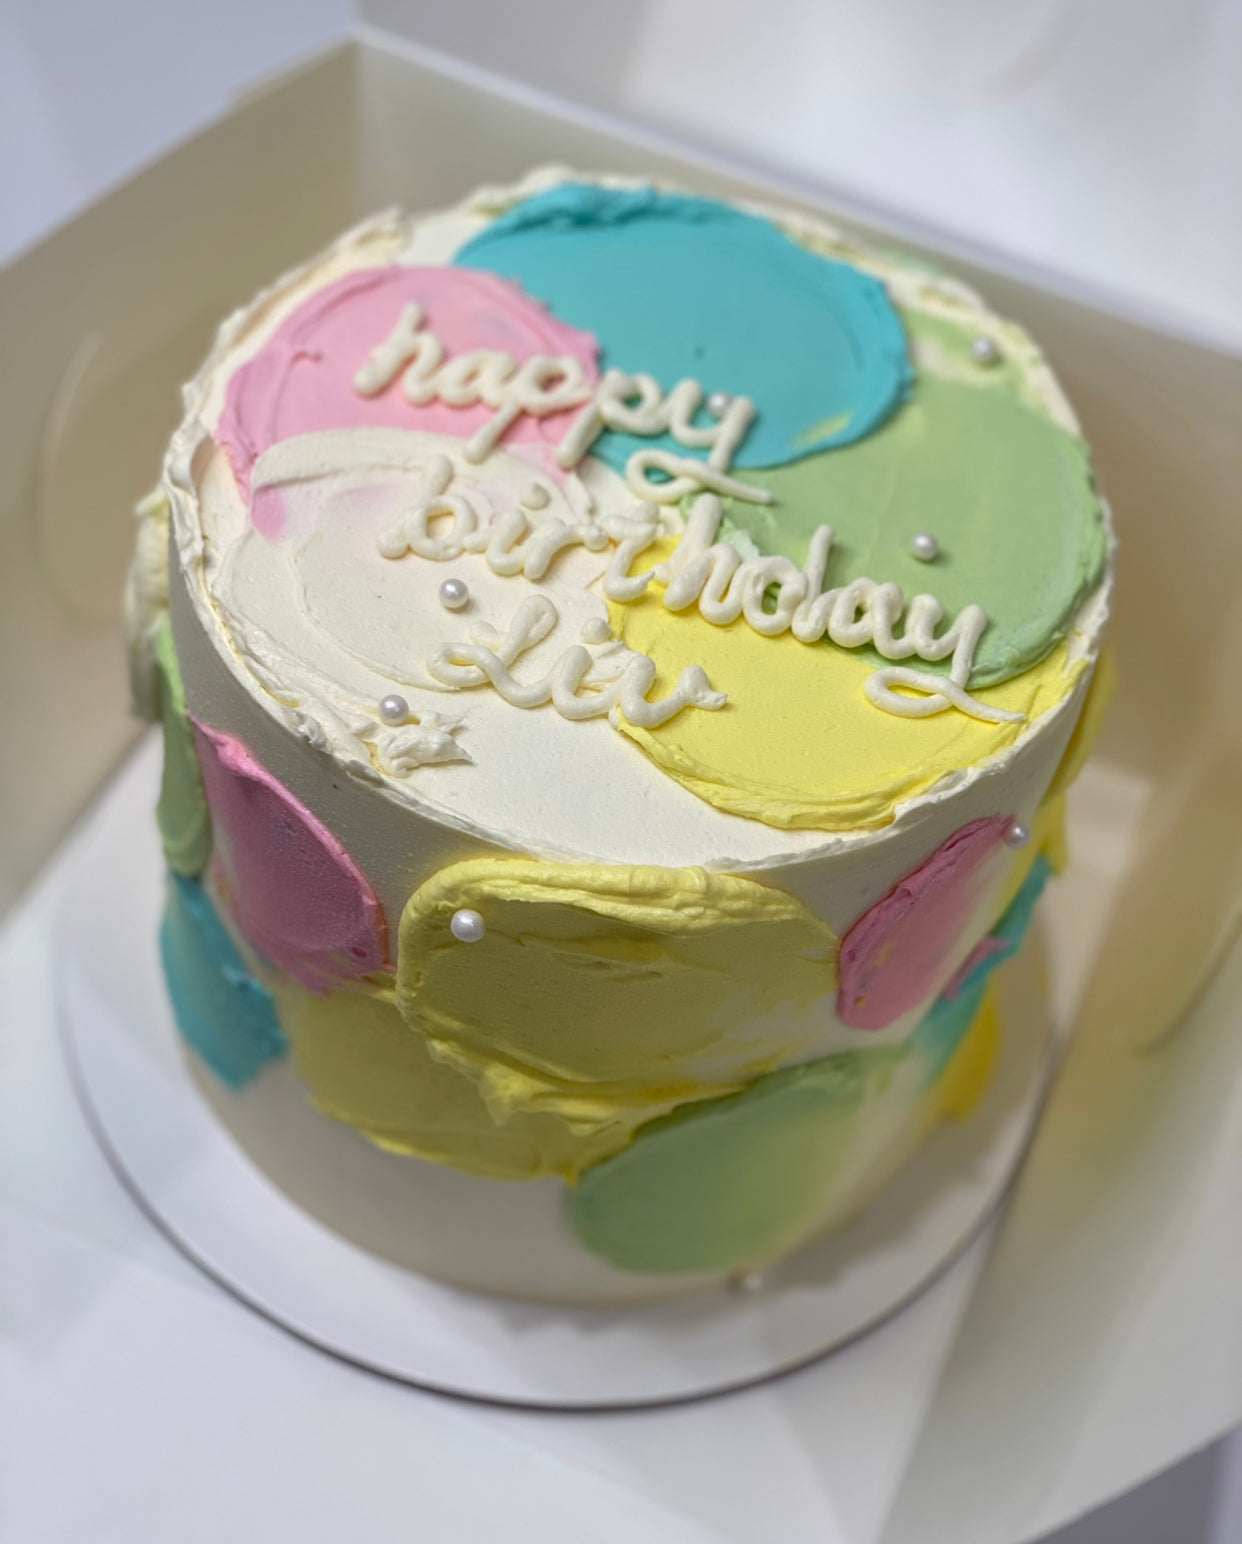 6”Piped pastel birthday